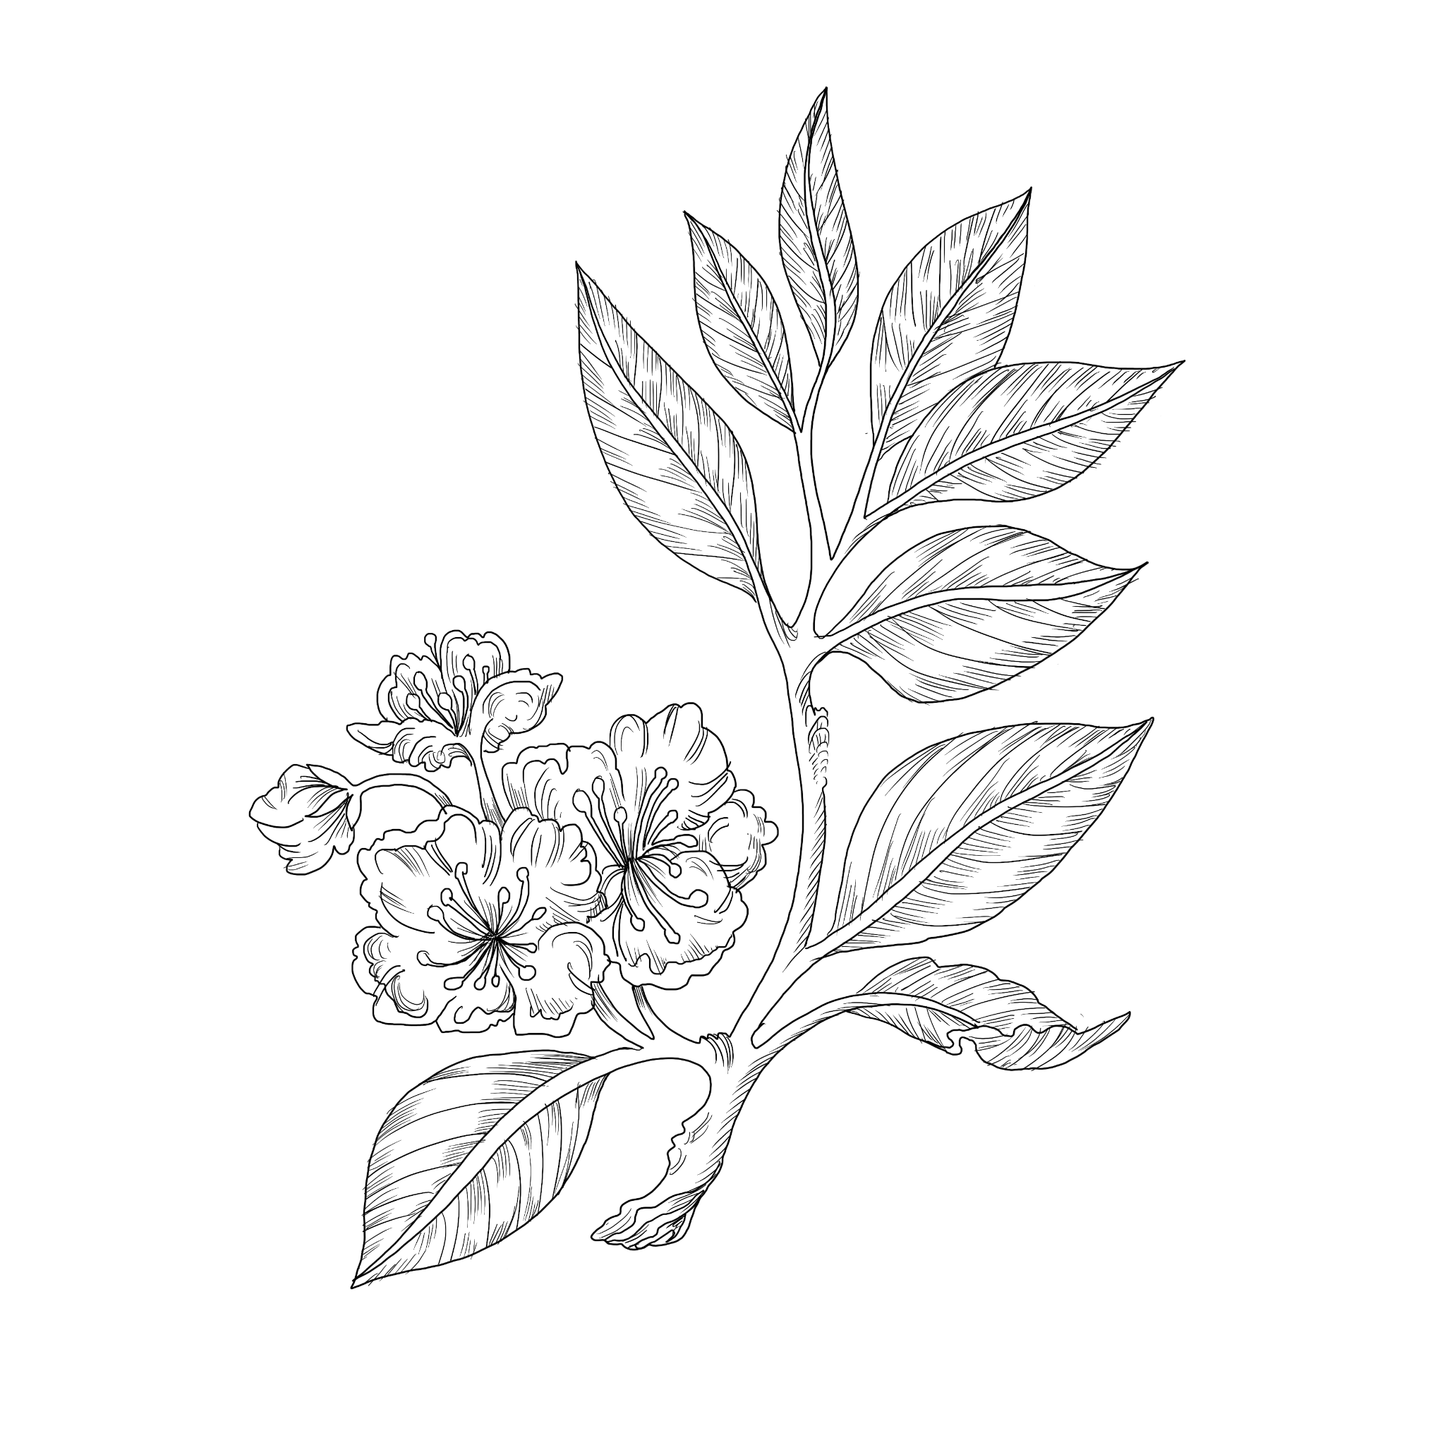 Botanical illustration line drawing of wild pear blossom.